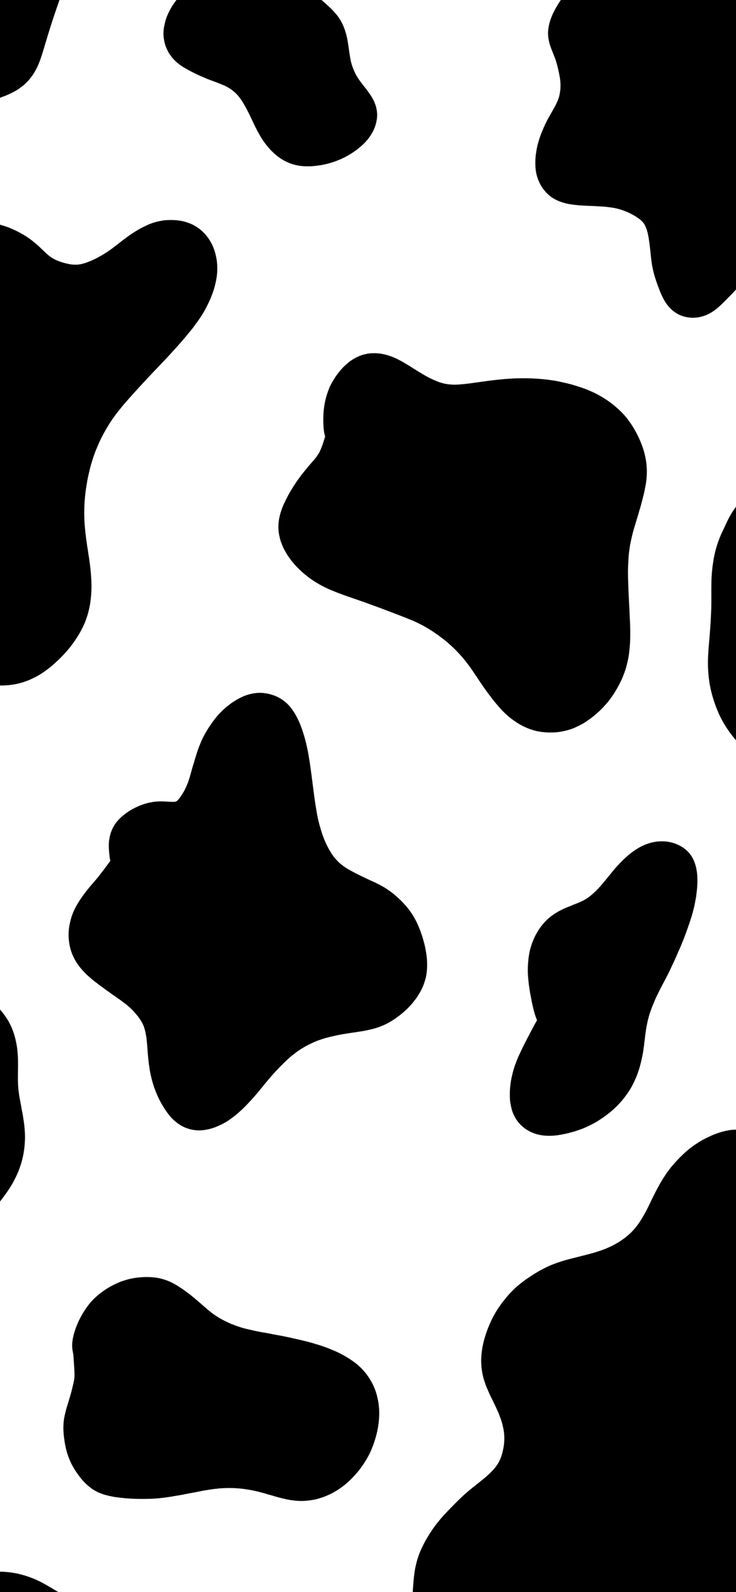 Cow Wallpaper. Cow wallpaper, Cute simple wallpaper, Preppy wallpaper. Cow wallpaper, Cute simple wallpaper, Preppy wallpaper